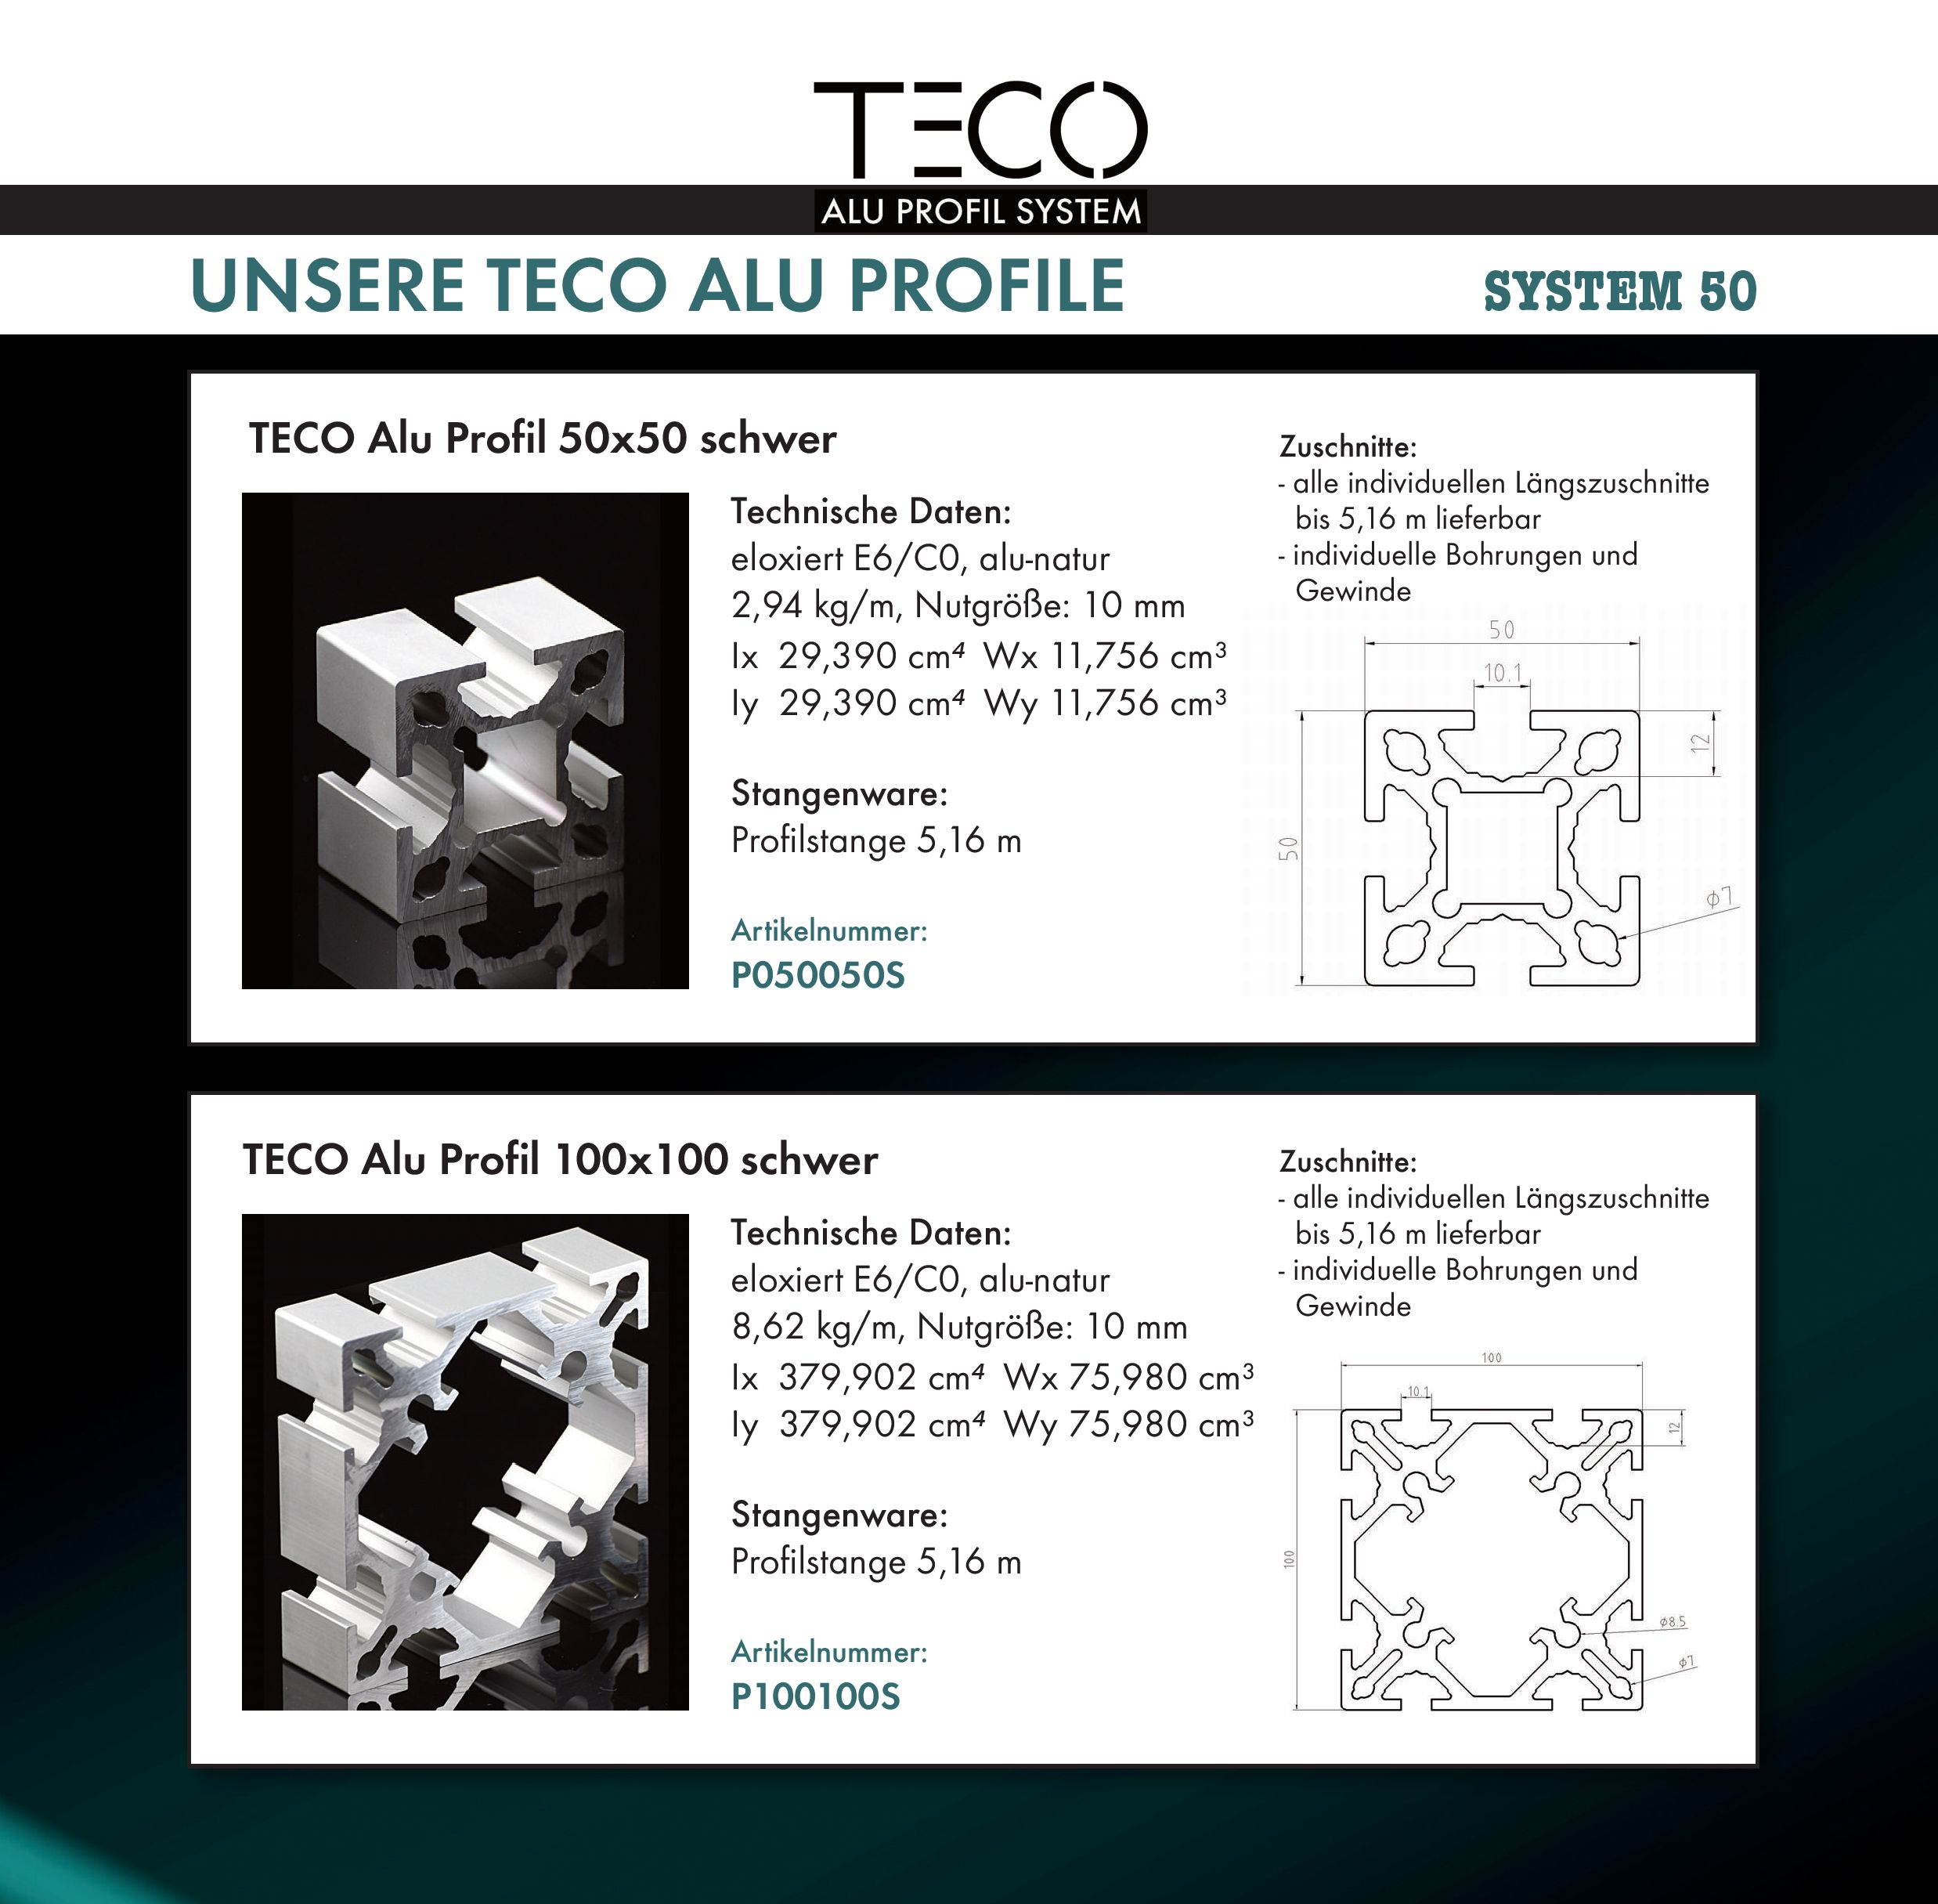 TECO Alu Profile